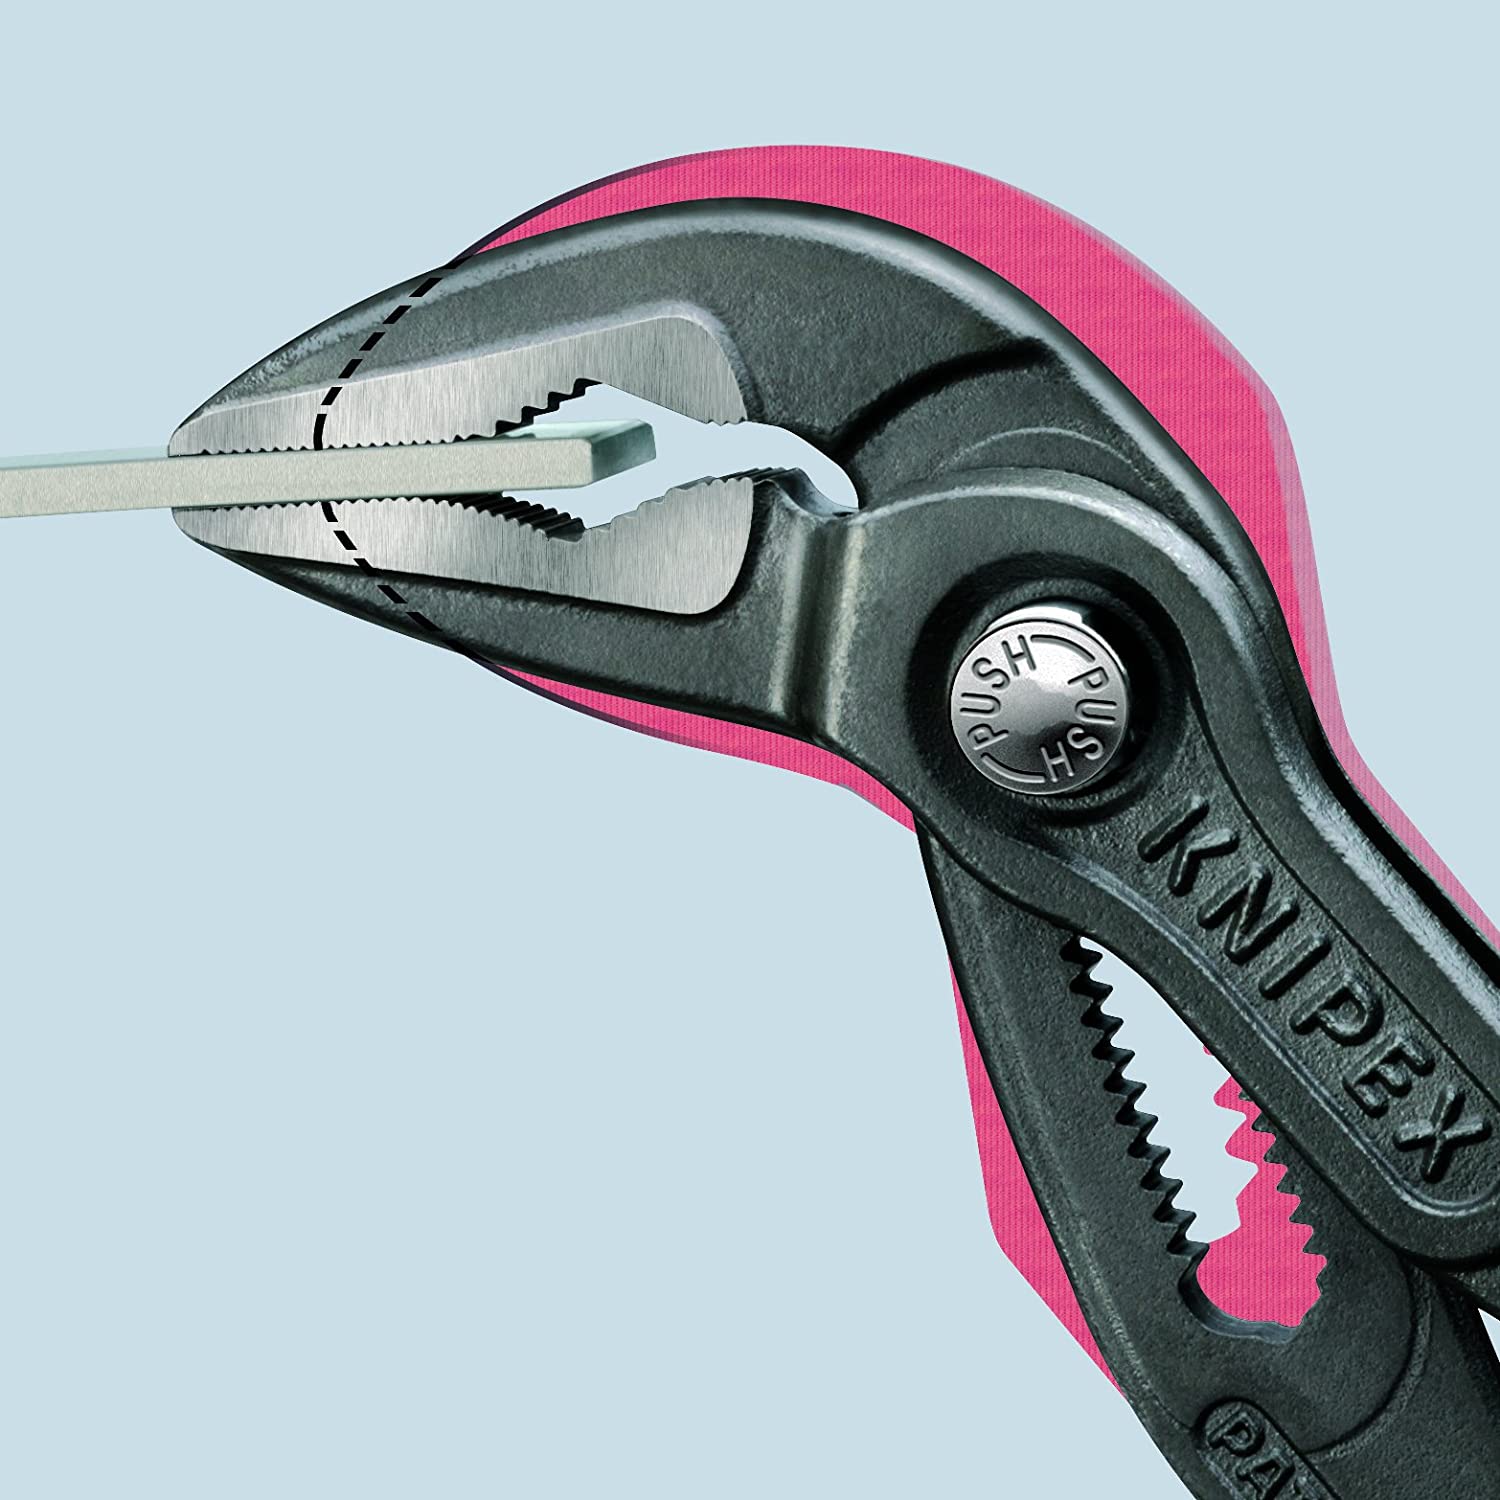 Knipex 8751250 10-Inch Cobra Extra Slim Pliers - MPR Tools & Equipment